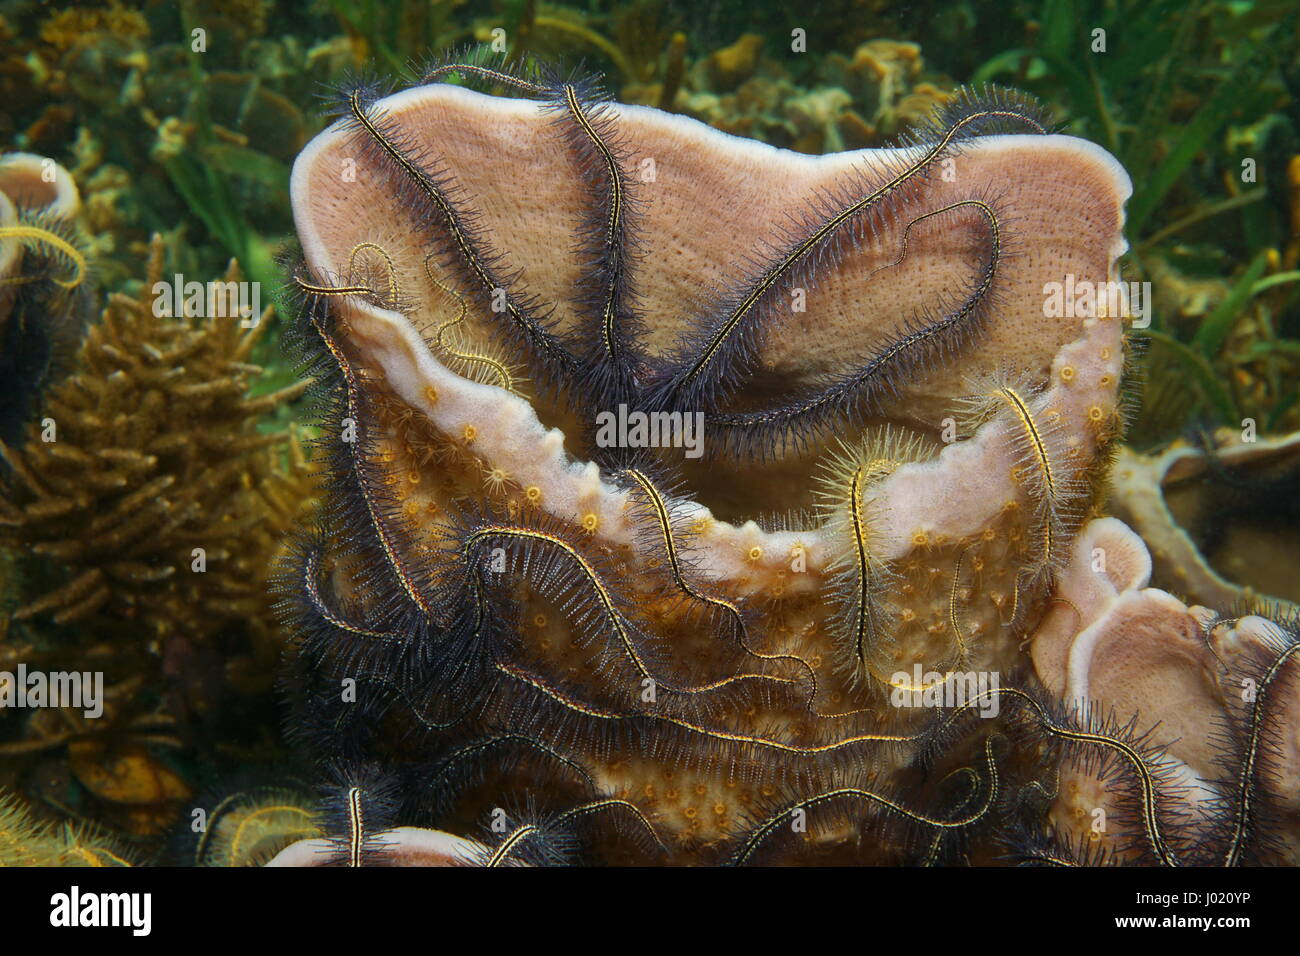 Sea sponge Callyspongia vaginalis colonized by brittle stars, underwater marine life in the Caribbean sea Stock Photo